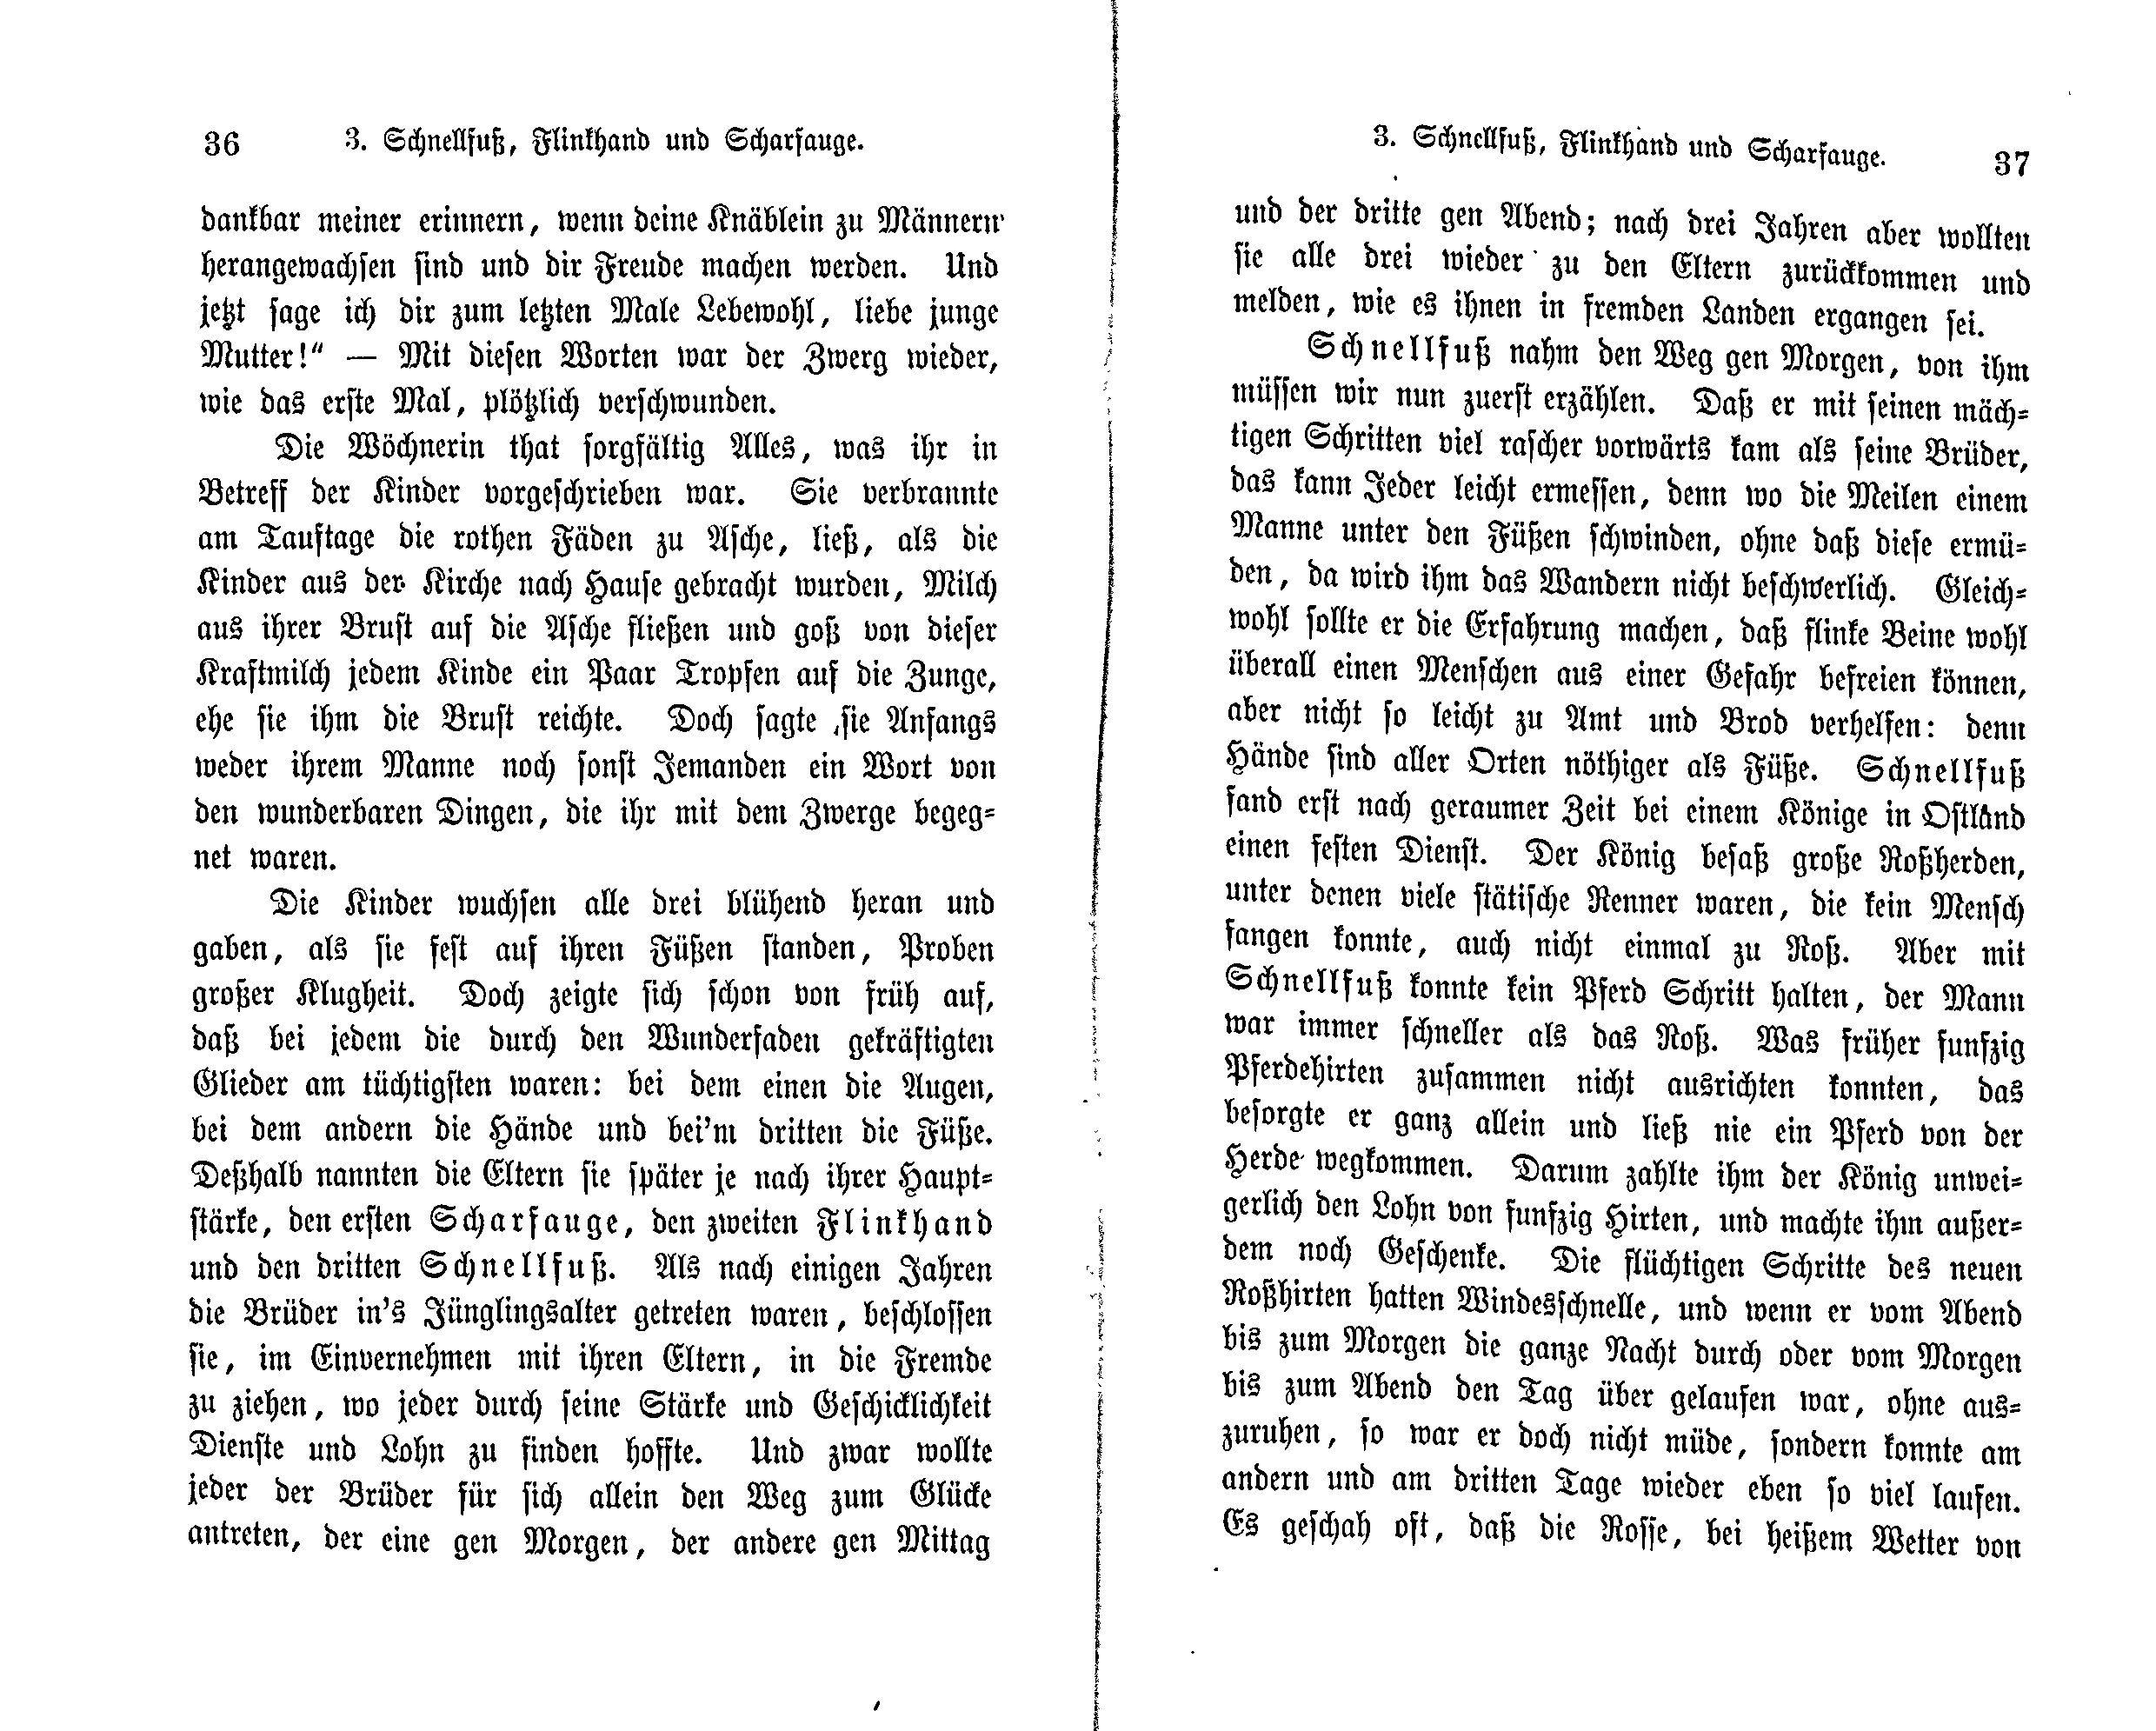 Estnische Märchen [1] (1869) | 23. (36-37) Main body of text